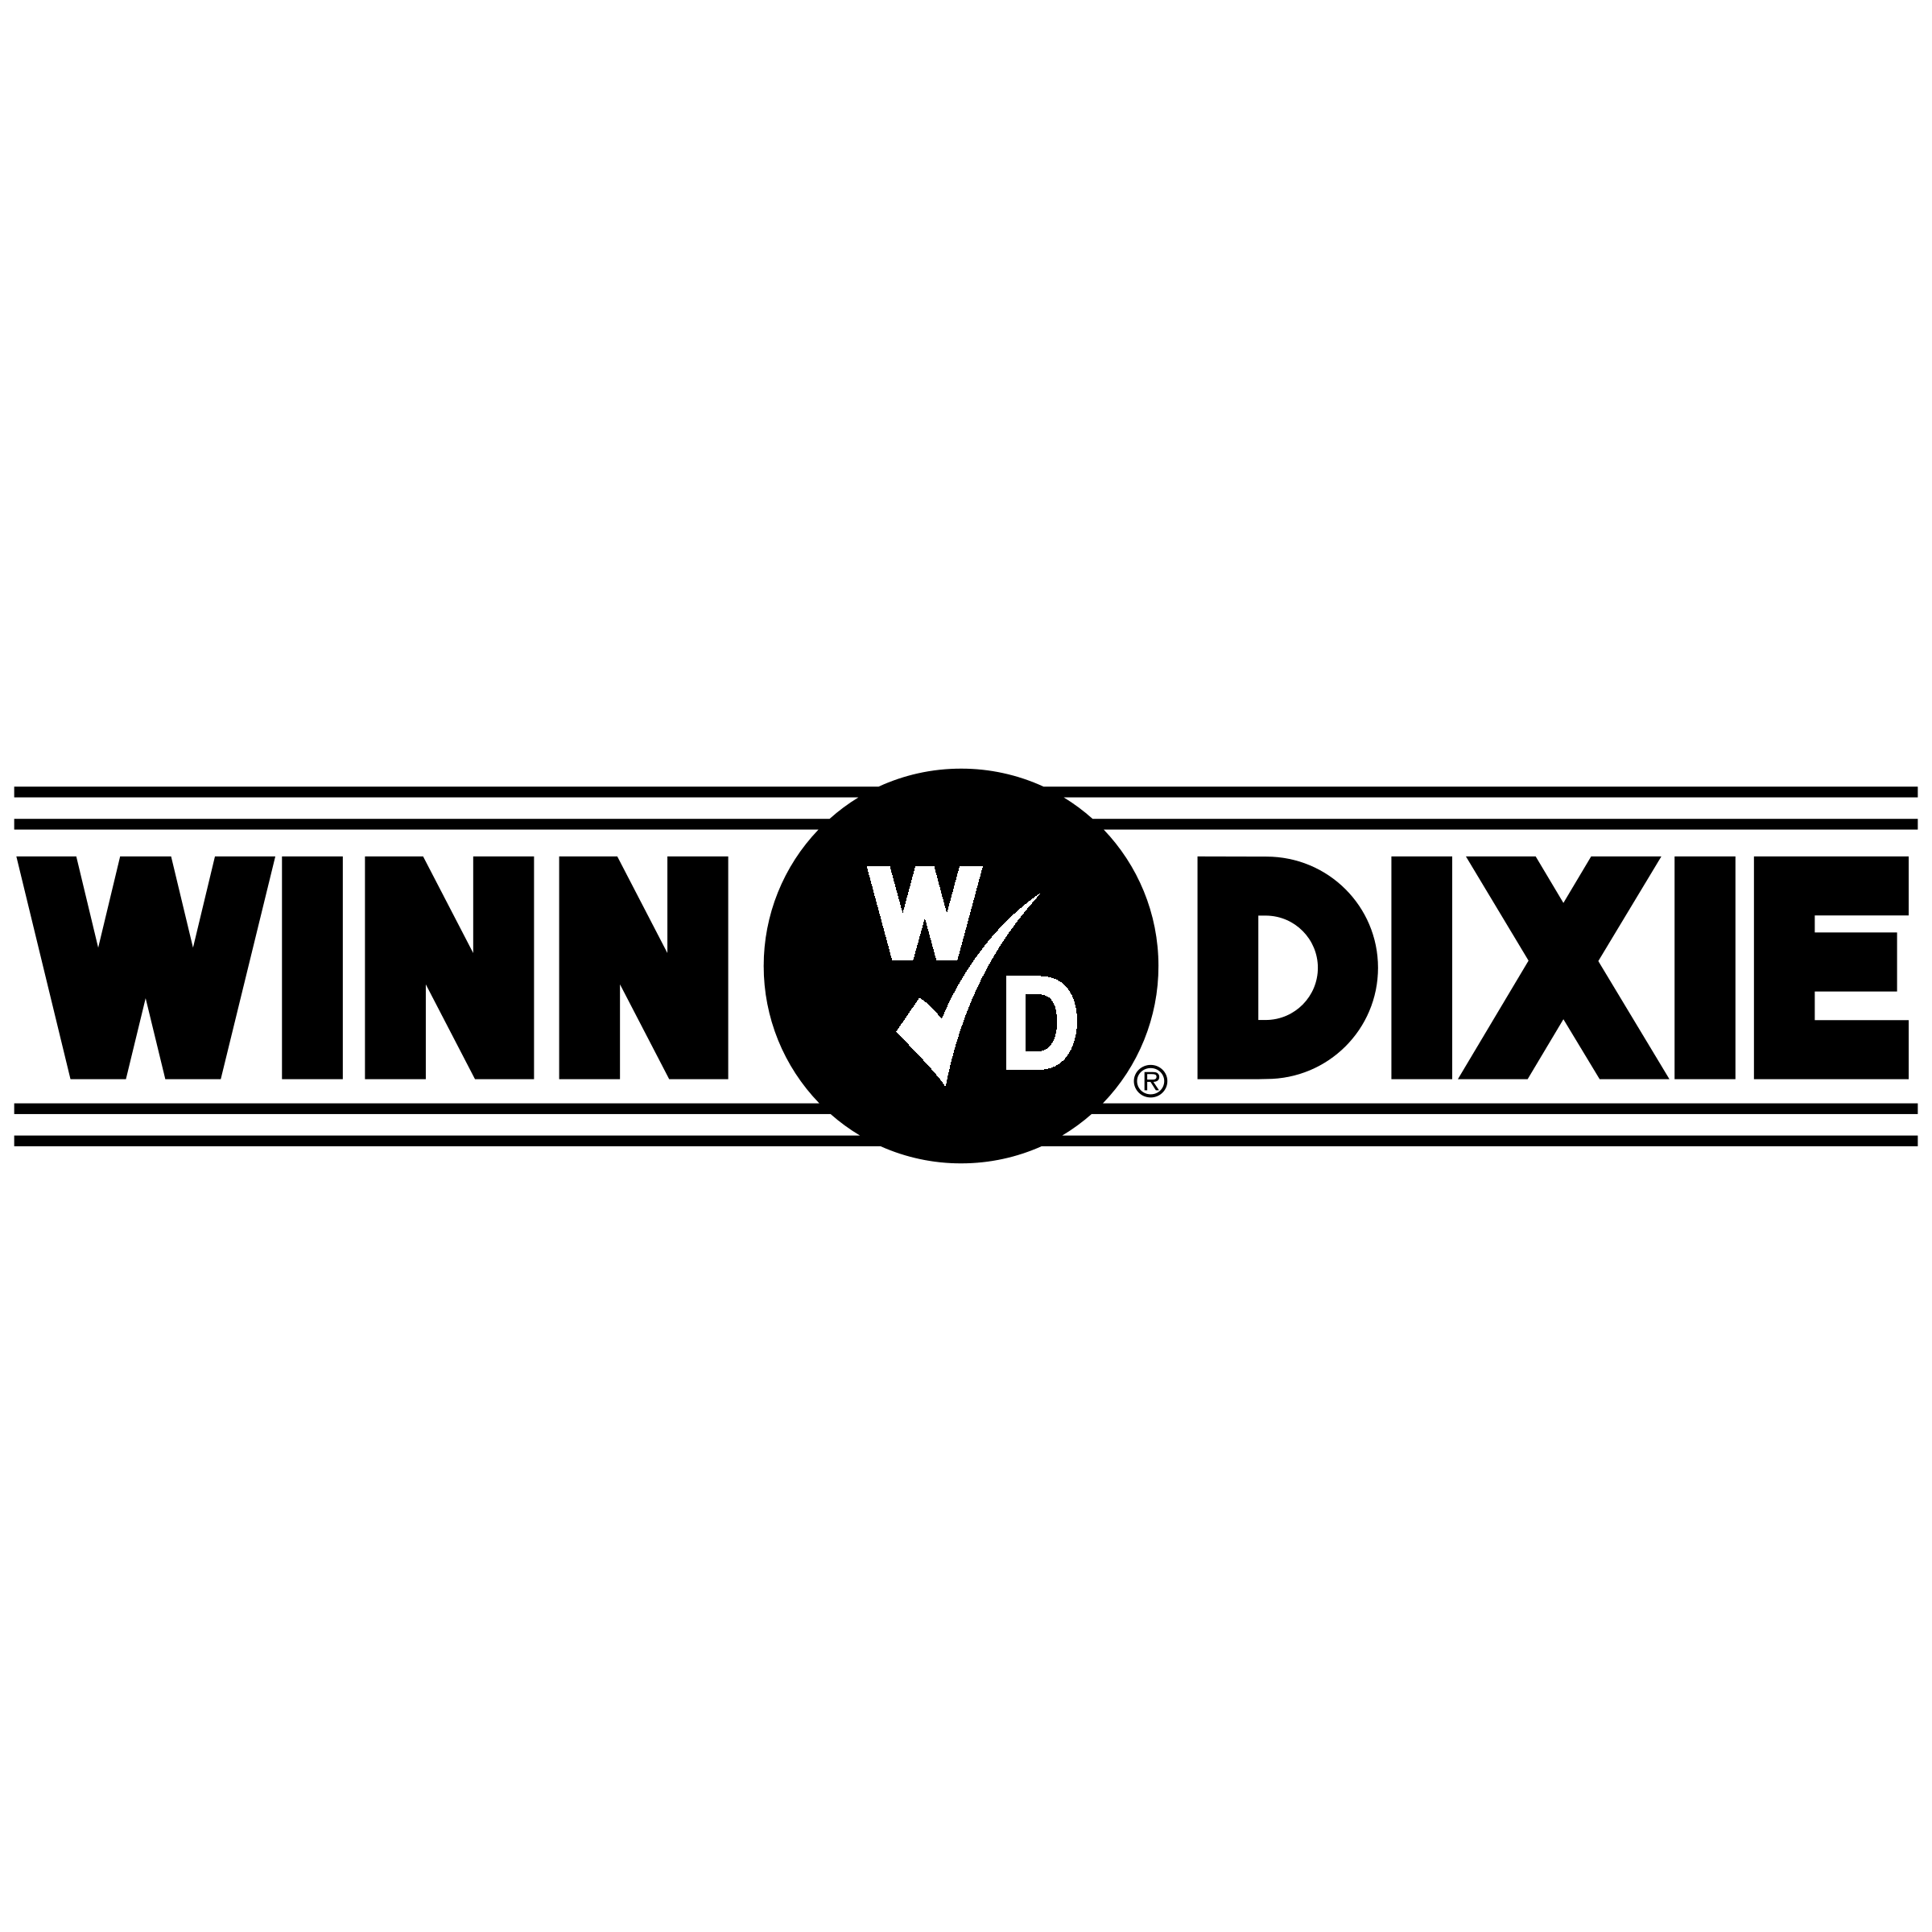 Dixie Logo - Winn Dixie Logo PNG Transparent & SVG Vector